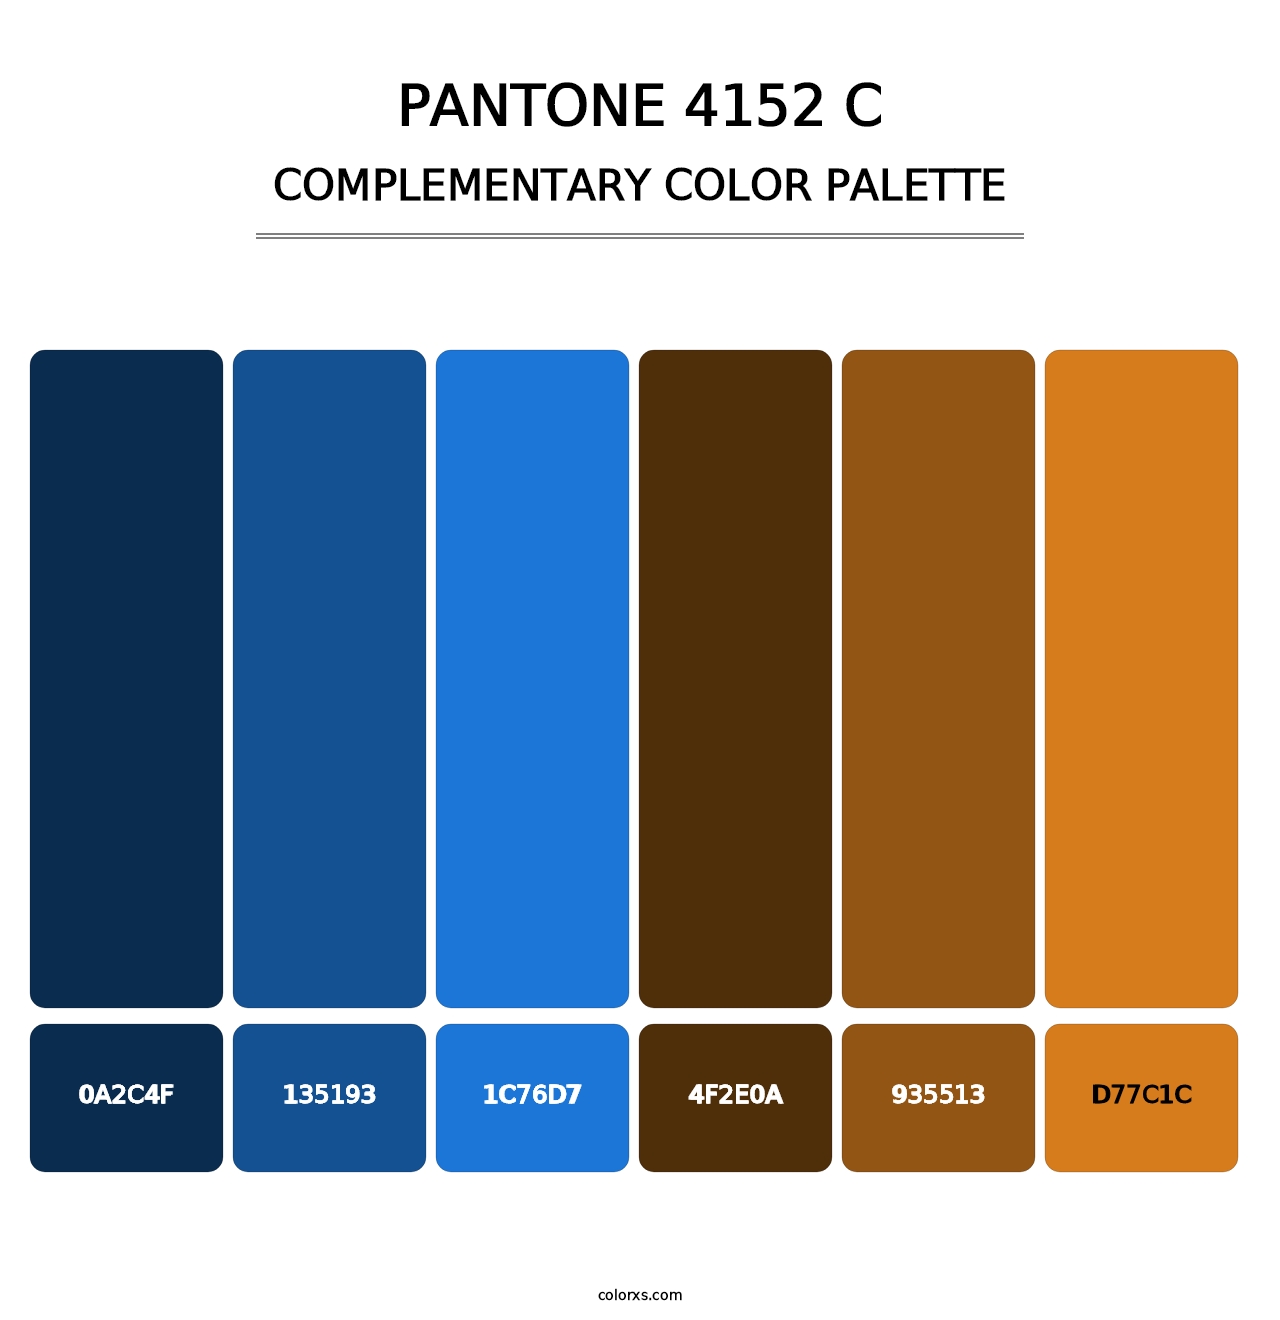 PANTONE 4152 C - Complementary Color Palette